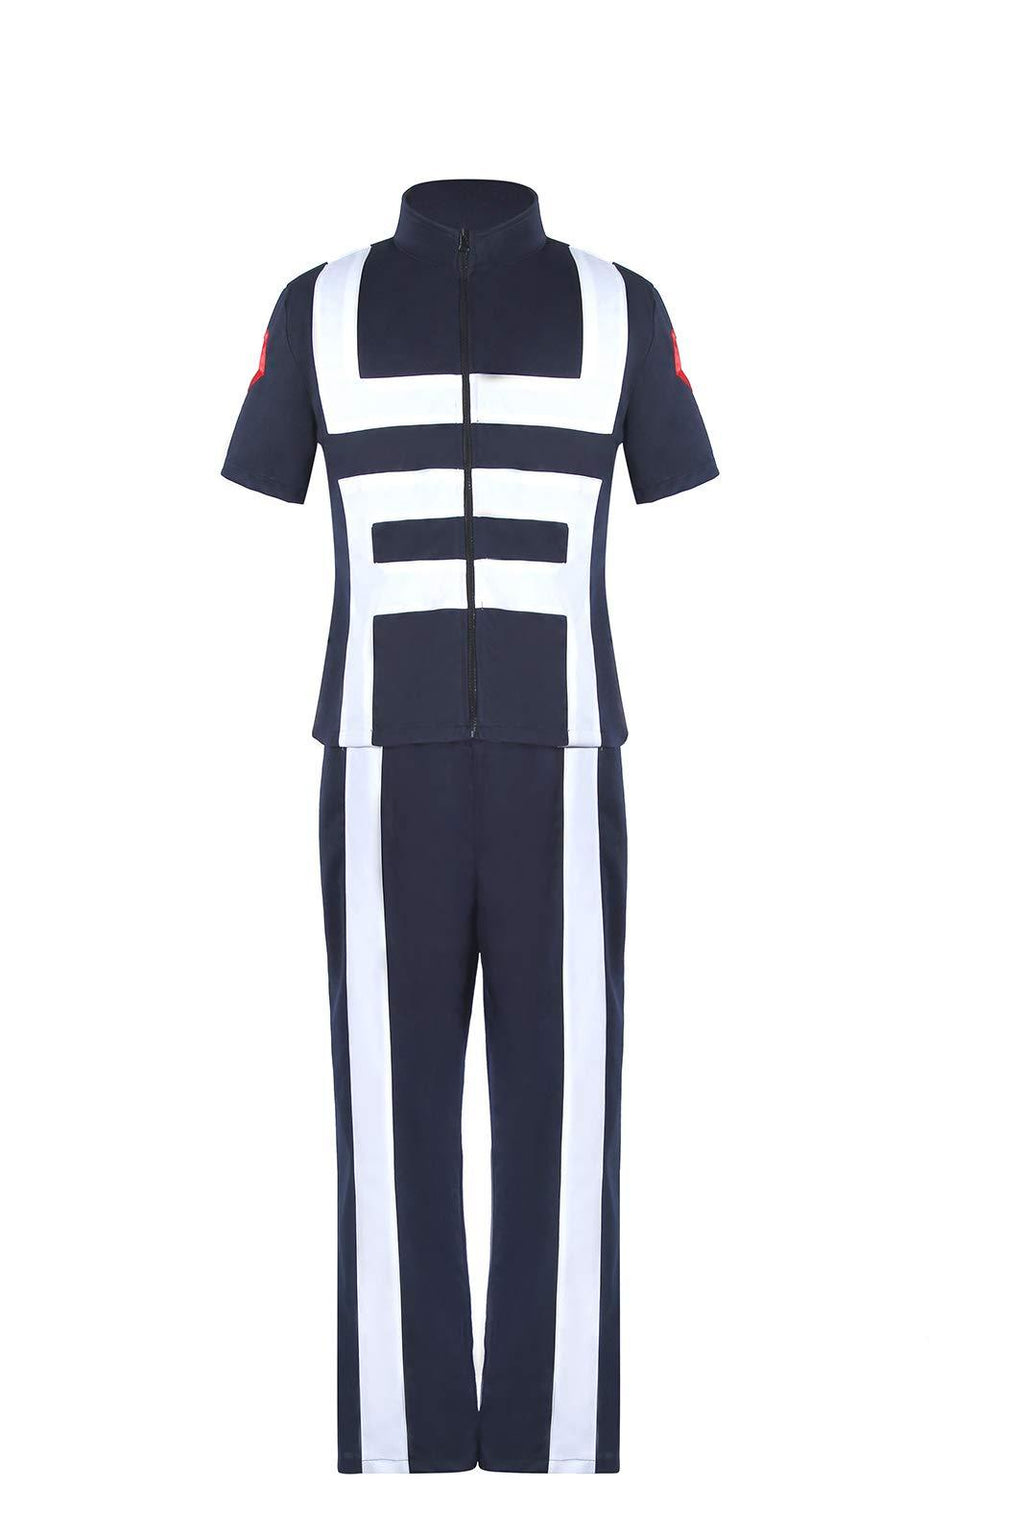 [Australia] - CR ROLECOS BNHA MHA Gym Uniform UA Training Uniform Deku Cosplay PE Outfit Small Navy Blue 